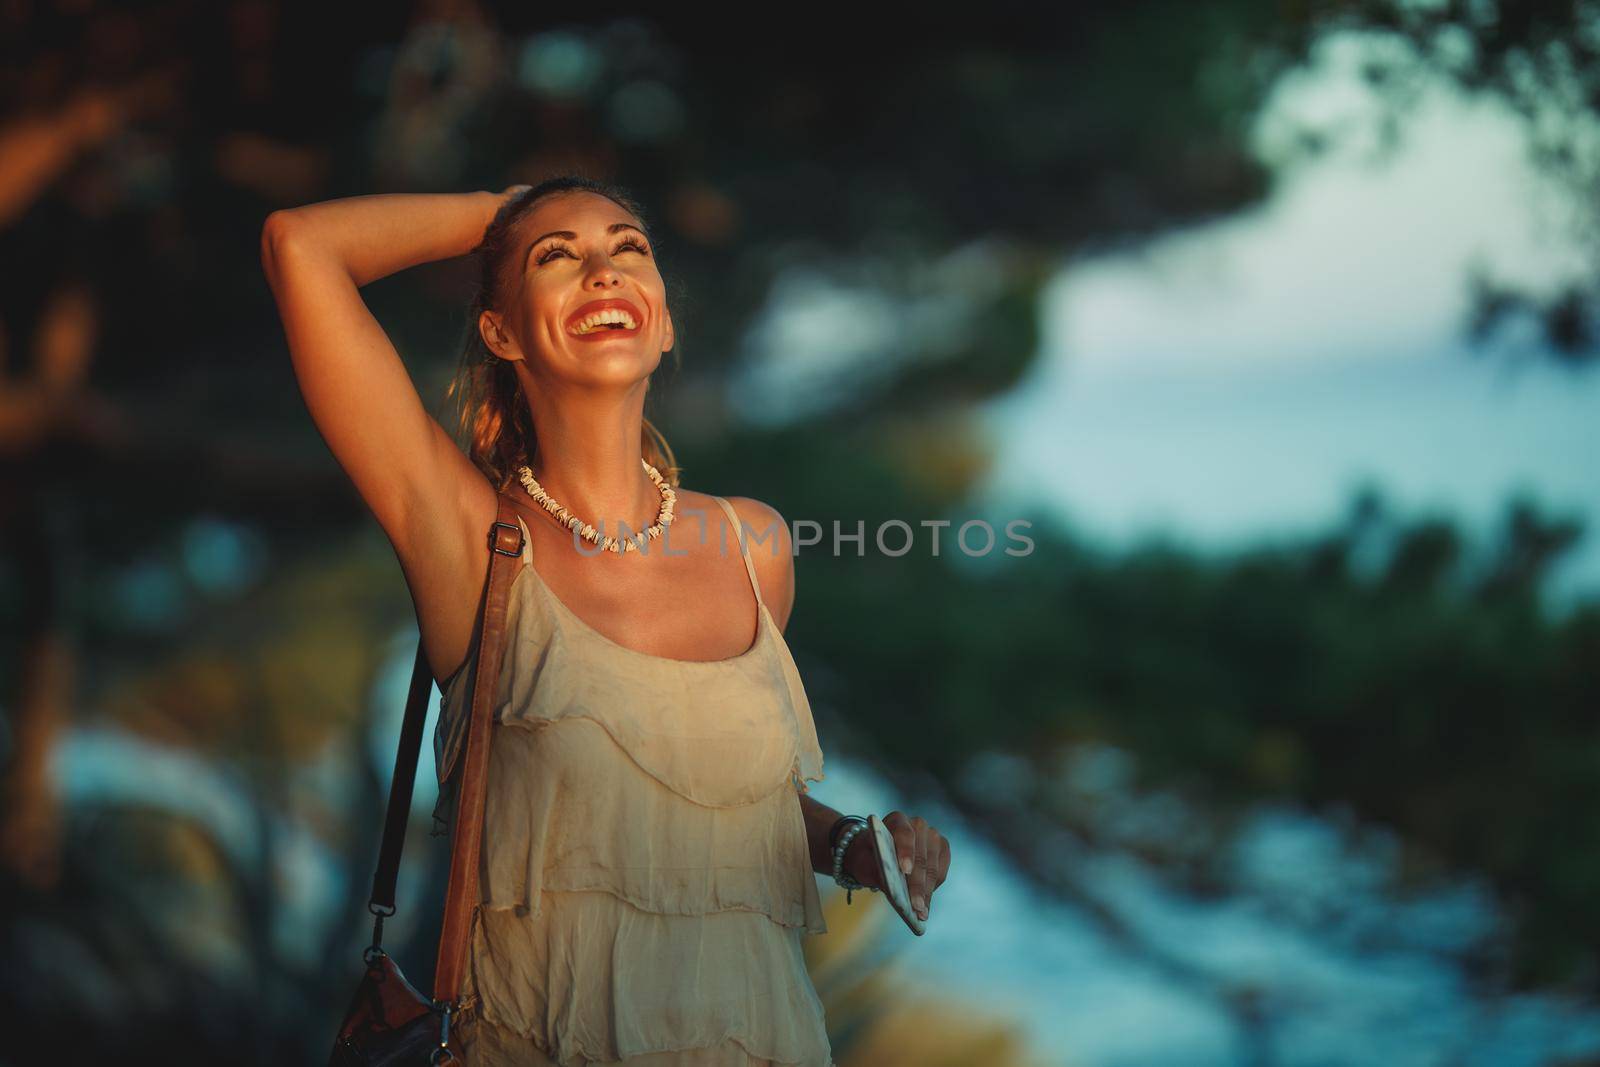 A cheerful young woman enjoying a summer vacation while walking through pine forest near Mediterranean sea.